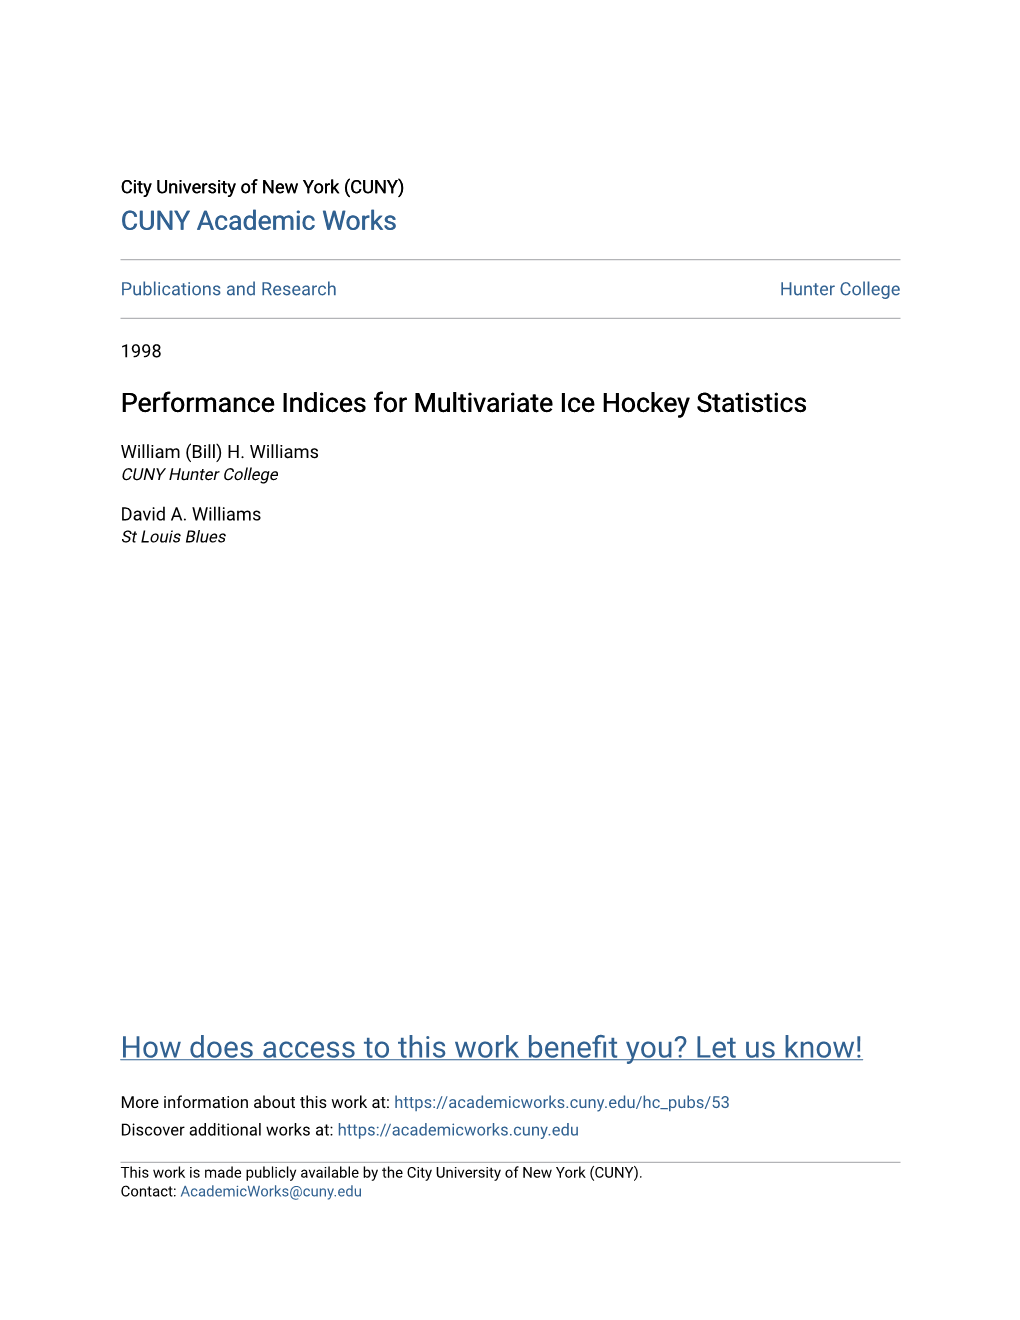 Performance Indices for Multivariate Ice Hockey Statistics